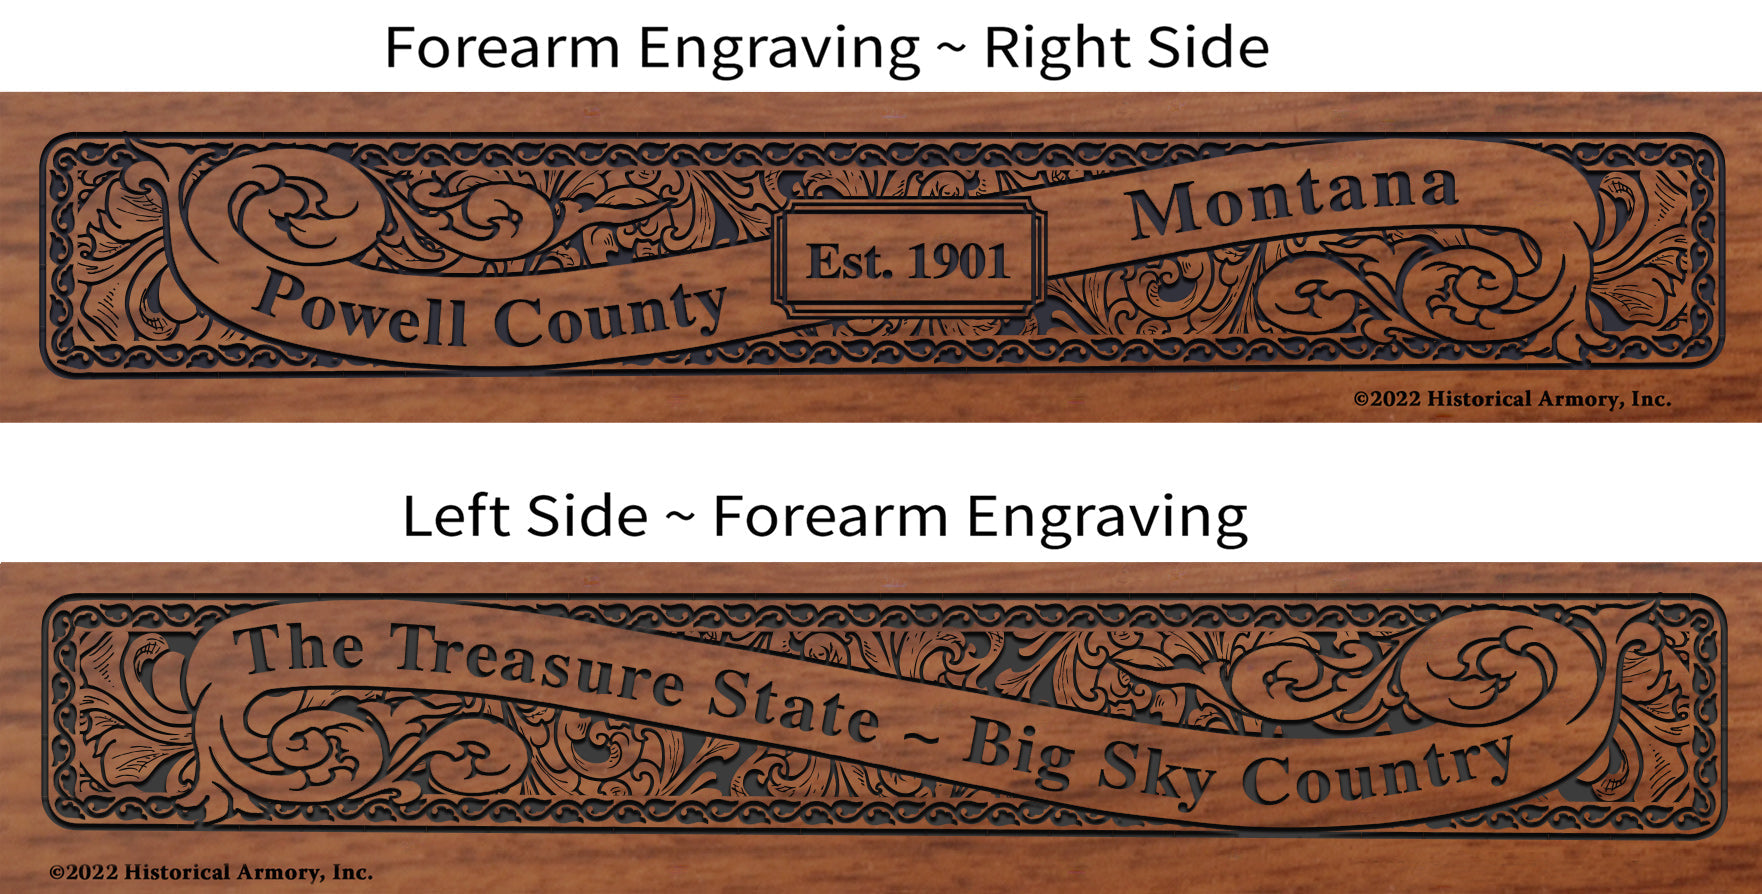 Powell County Montana Engraved Rifle Forearm